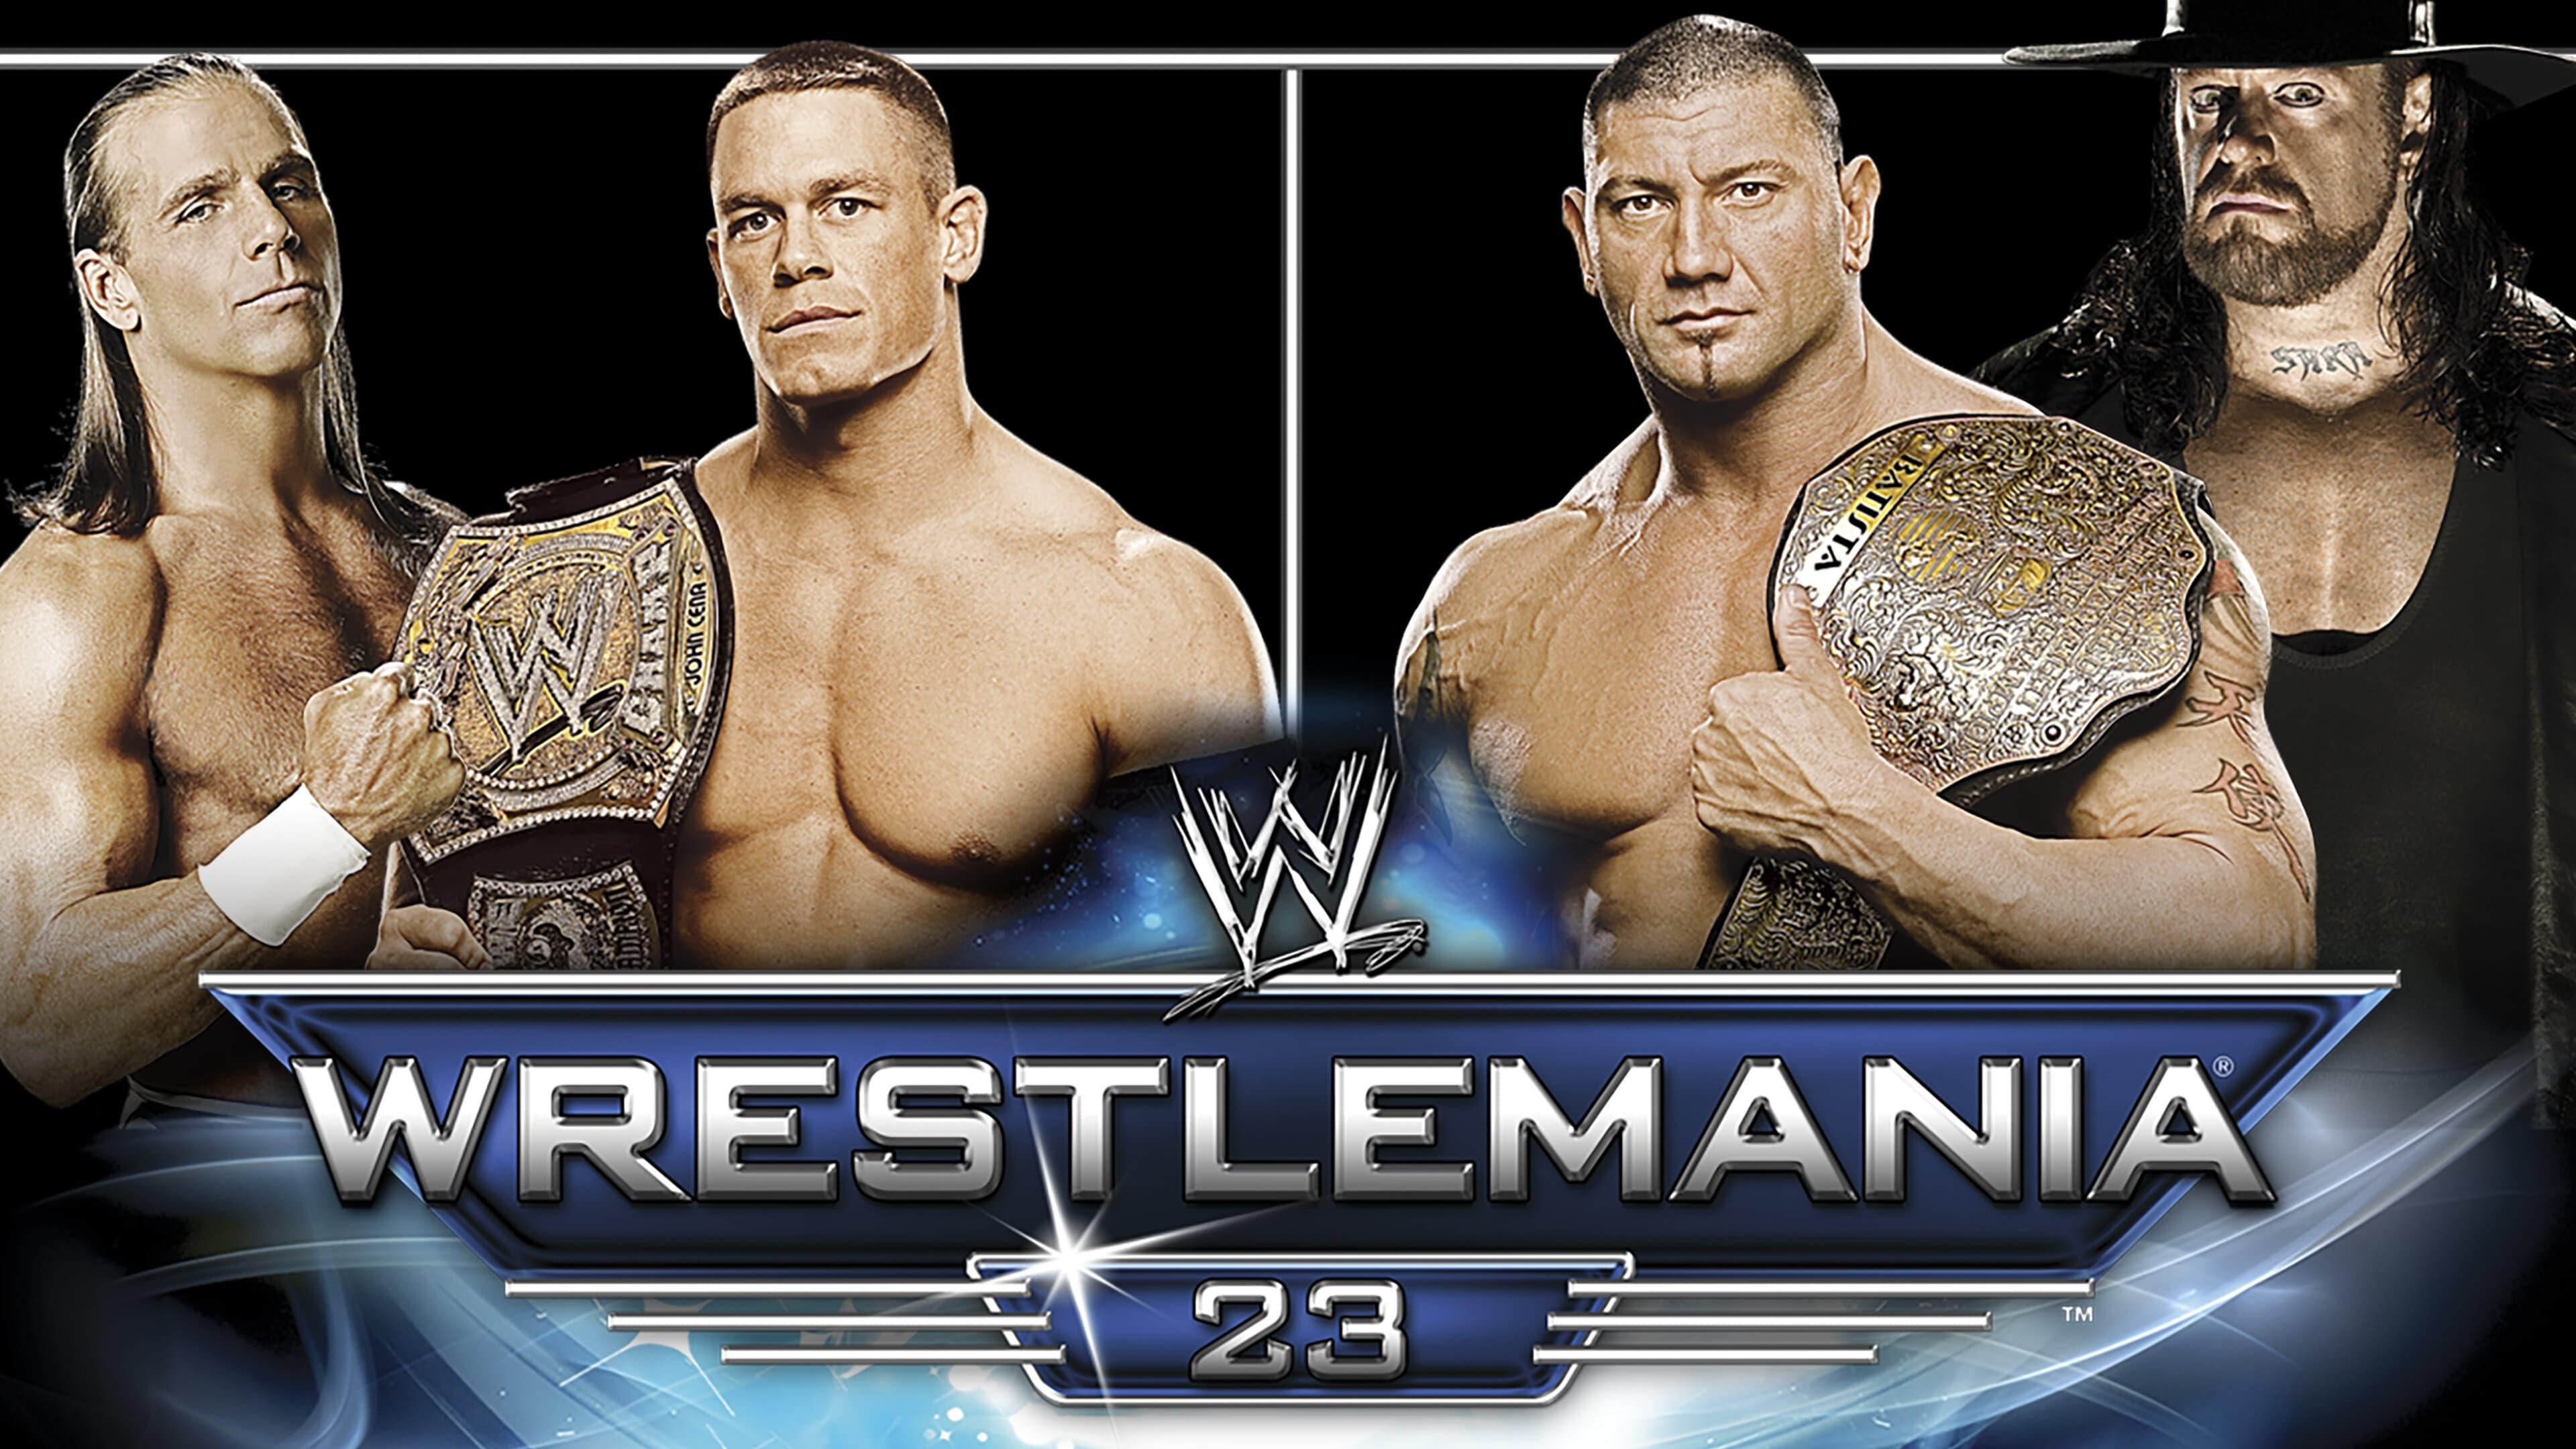 WWE WrestleMania 23 backdrop